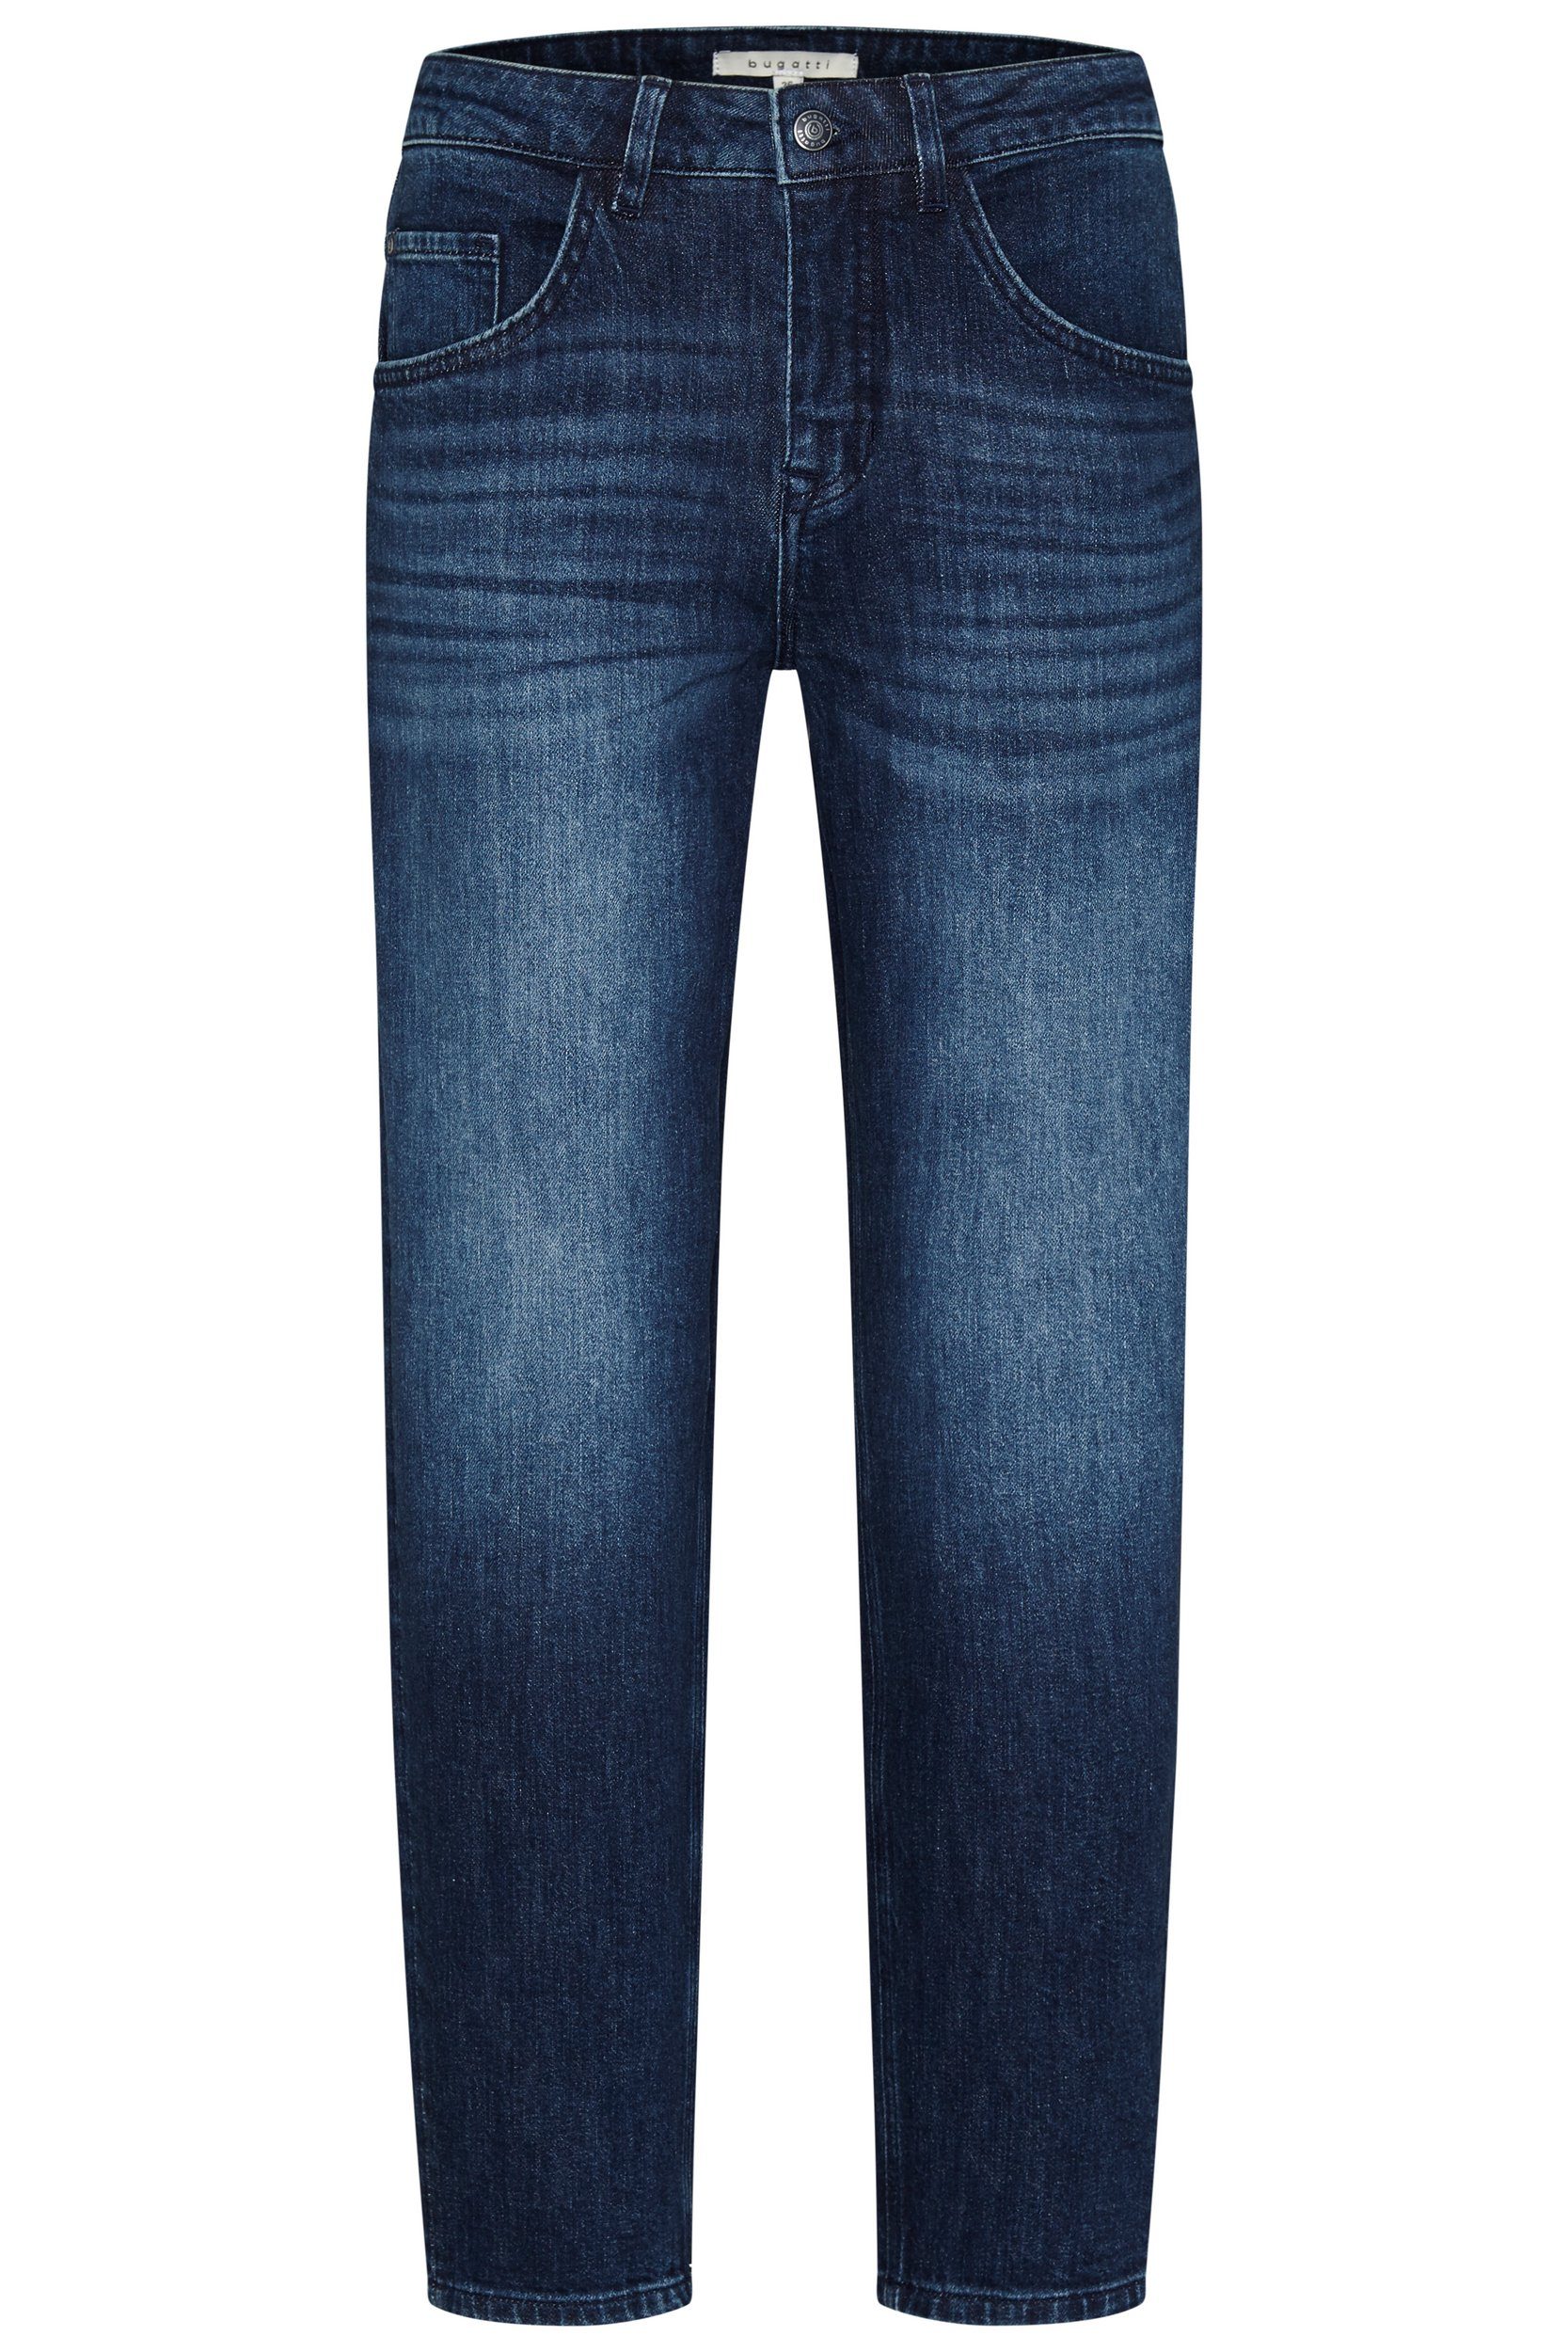 Schnitt mit lockerem bugatti 5-Pocket-Jeans